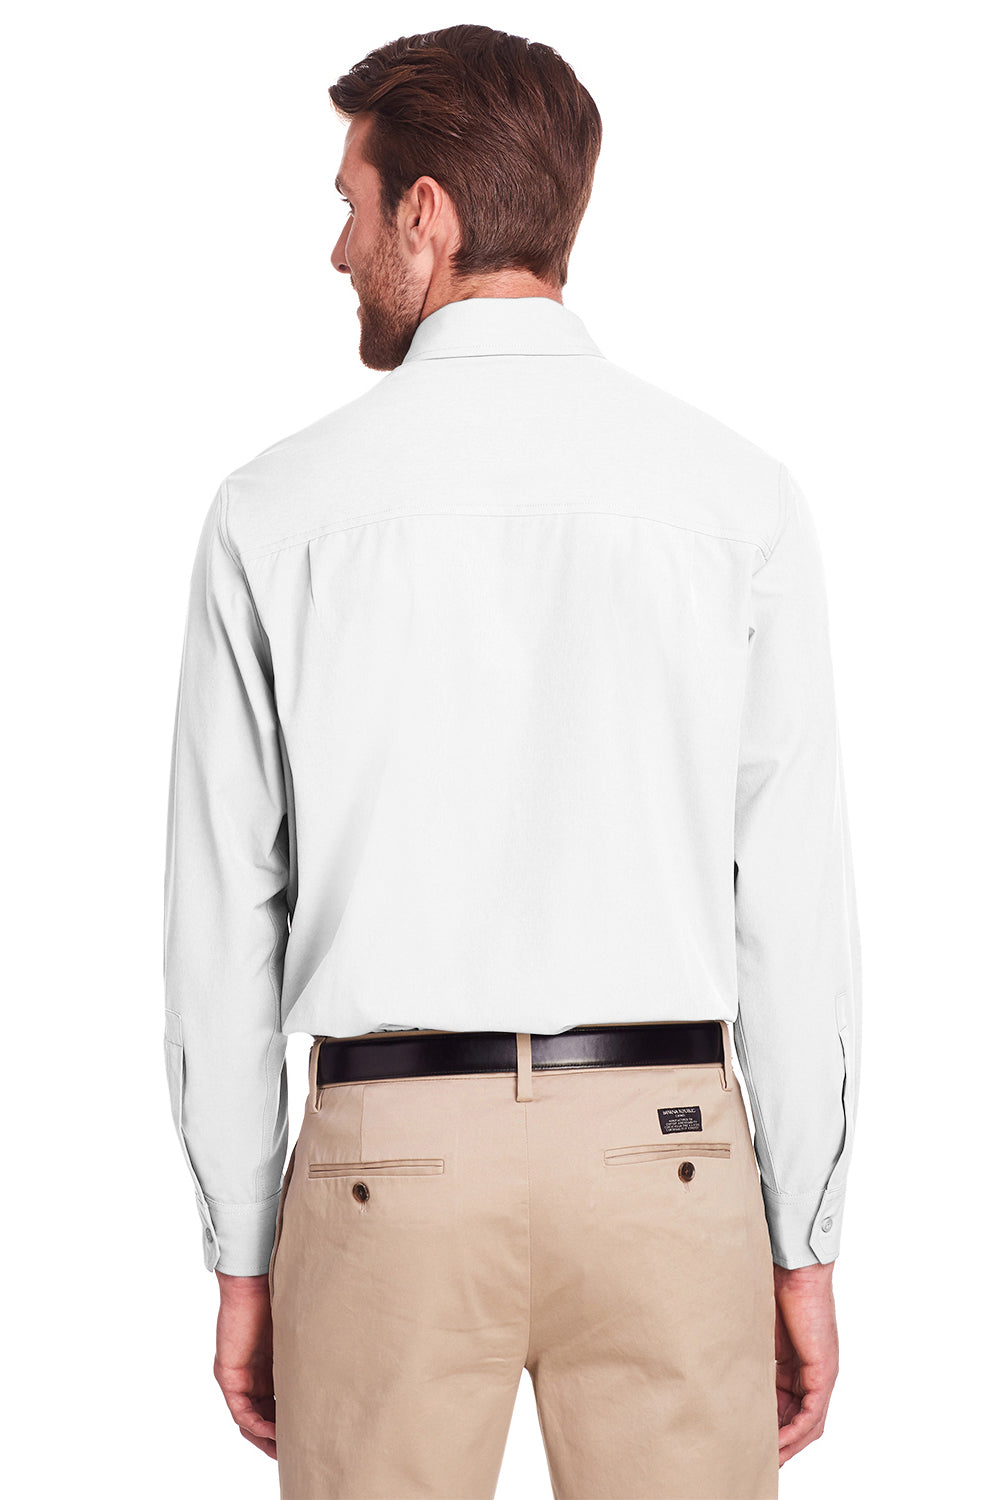 UltraClub UC500 Mens Bradley Performance Moisture Wicking Long Sleeve Button Down Shirt w/ Pocket White Back